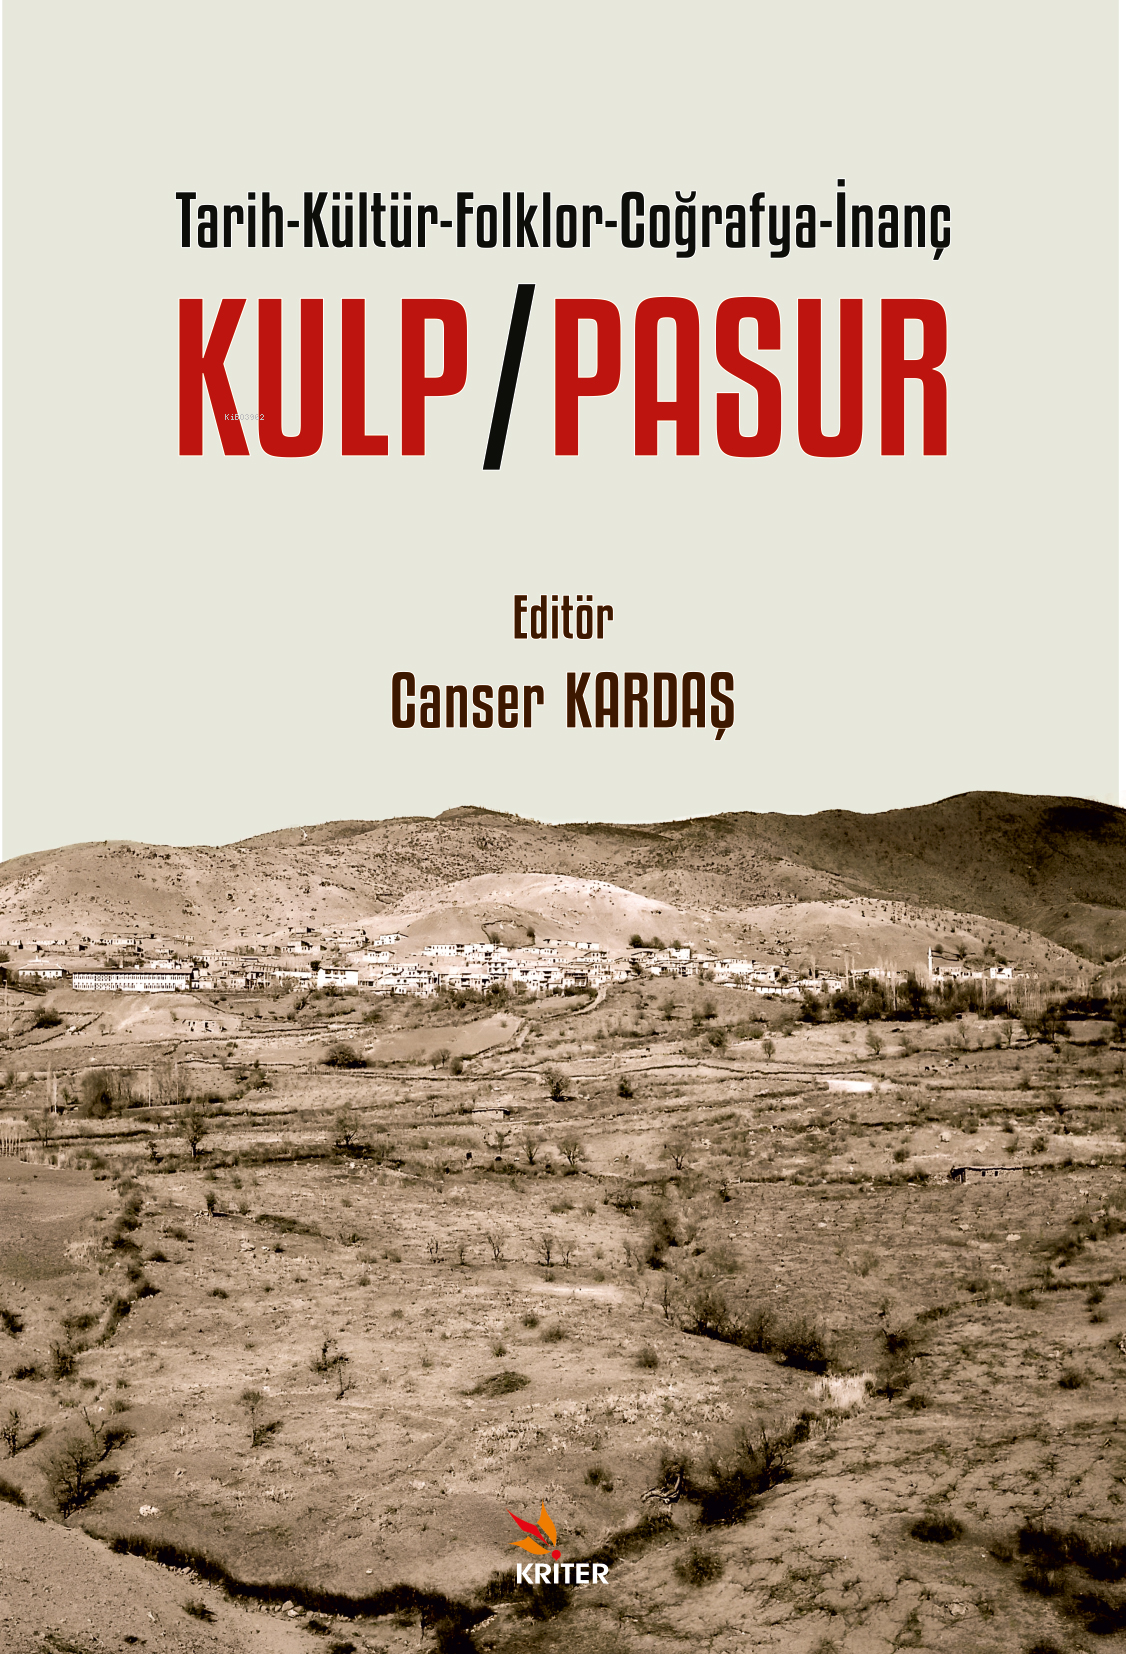 Kulp - Pasur;Tarih - Kültür - Folklor - Coğrafya - İnanç